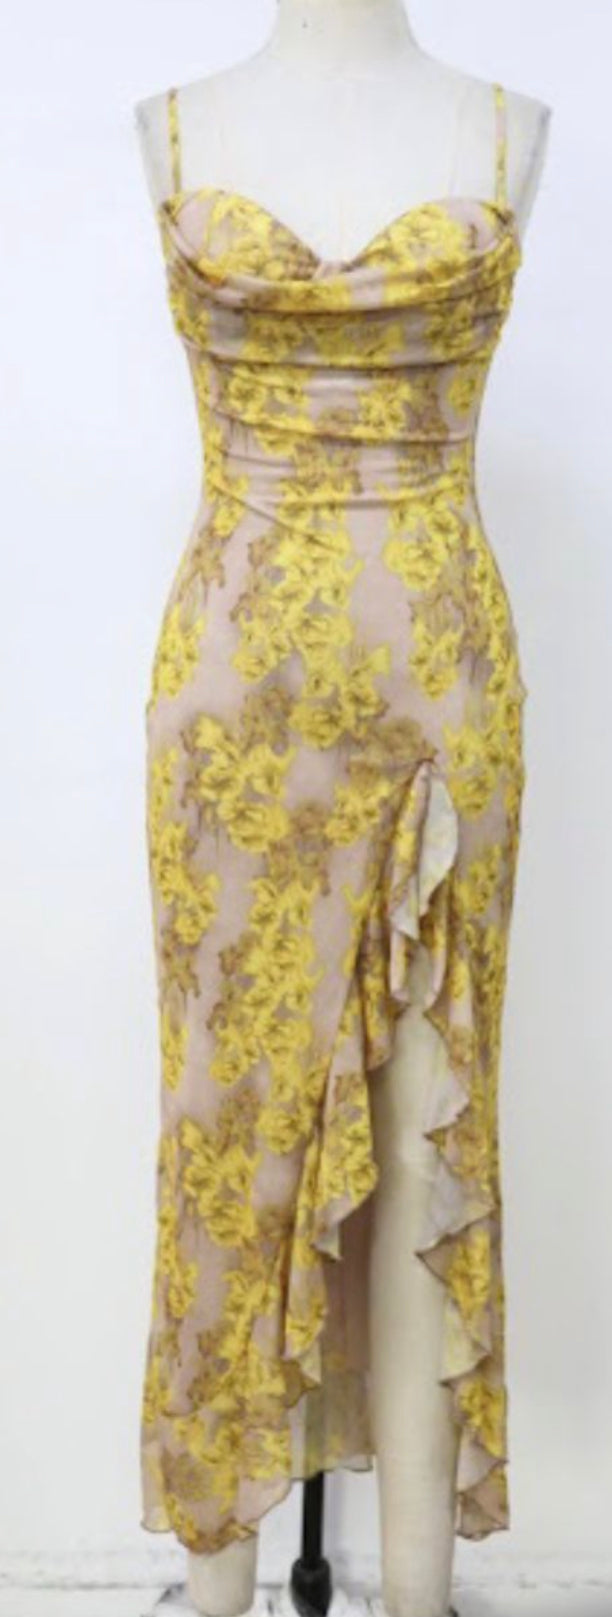 Katherine flower print dress- Yellow/nude